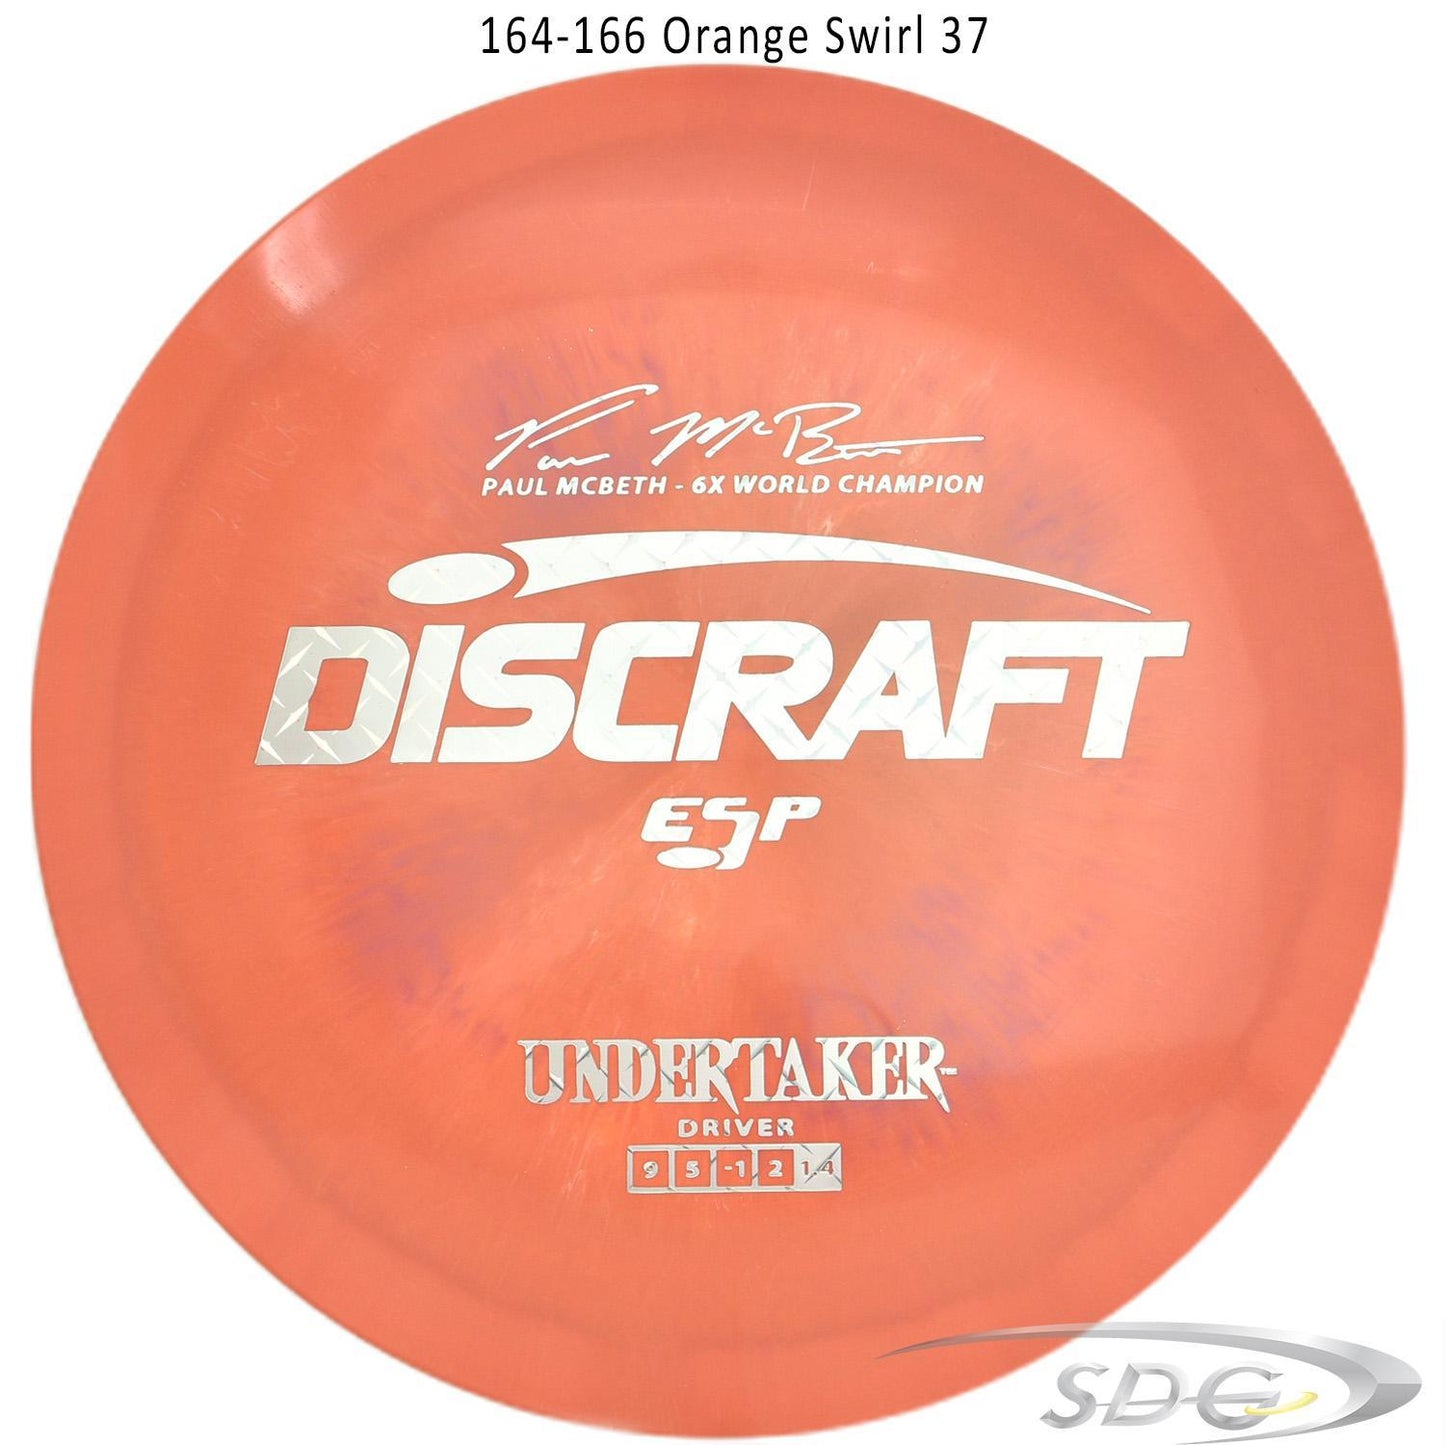 discraft-esp-undertaker-6x-paul-mcbeth-signature-series-disc-golf-distance-driver 164-166 Orange Swirl 37